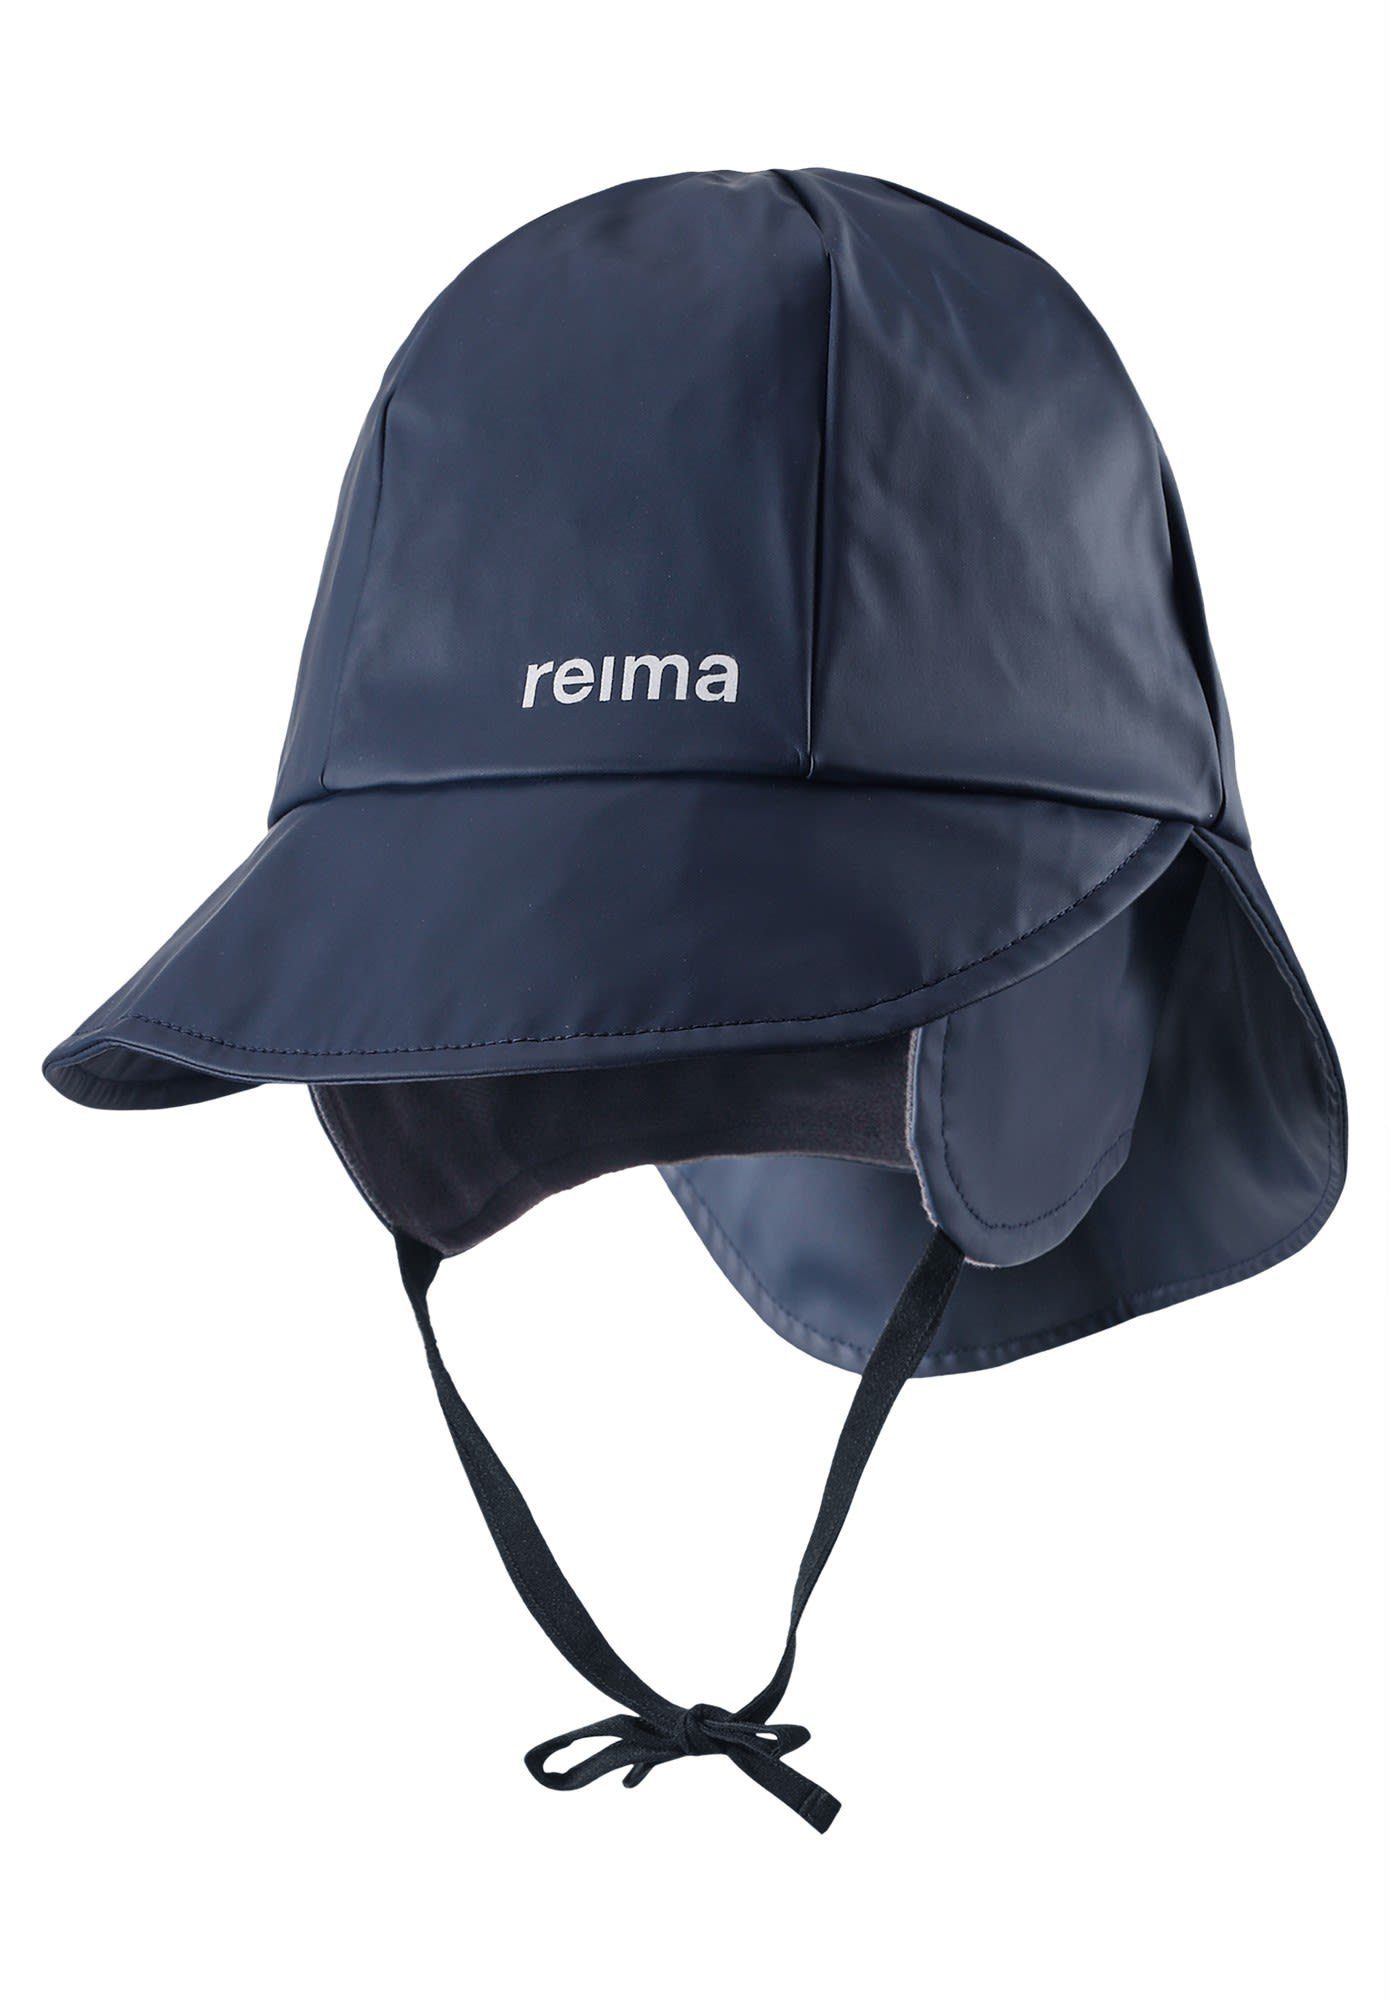 reima Kopfabdeckung Reima Kids Rainy Rain Hat (vorgängermodell) Kinder